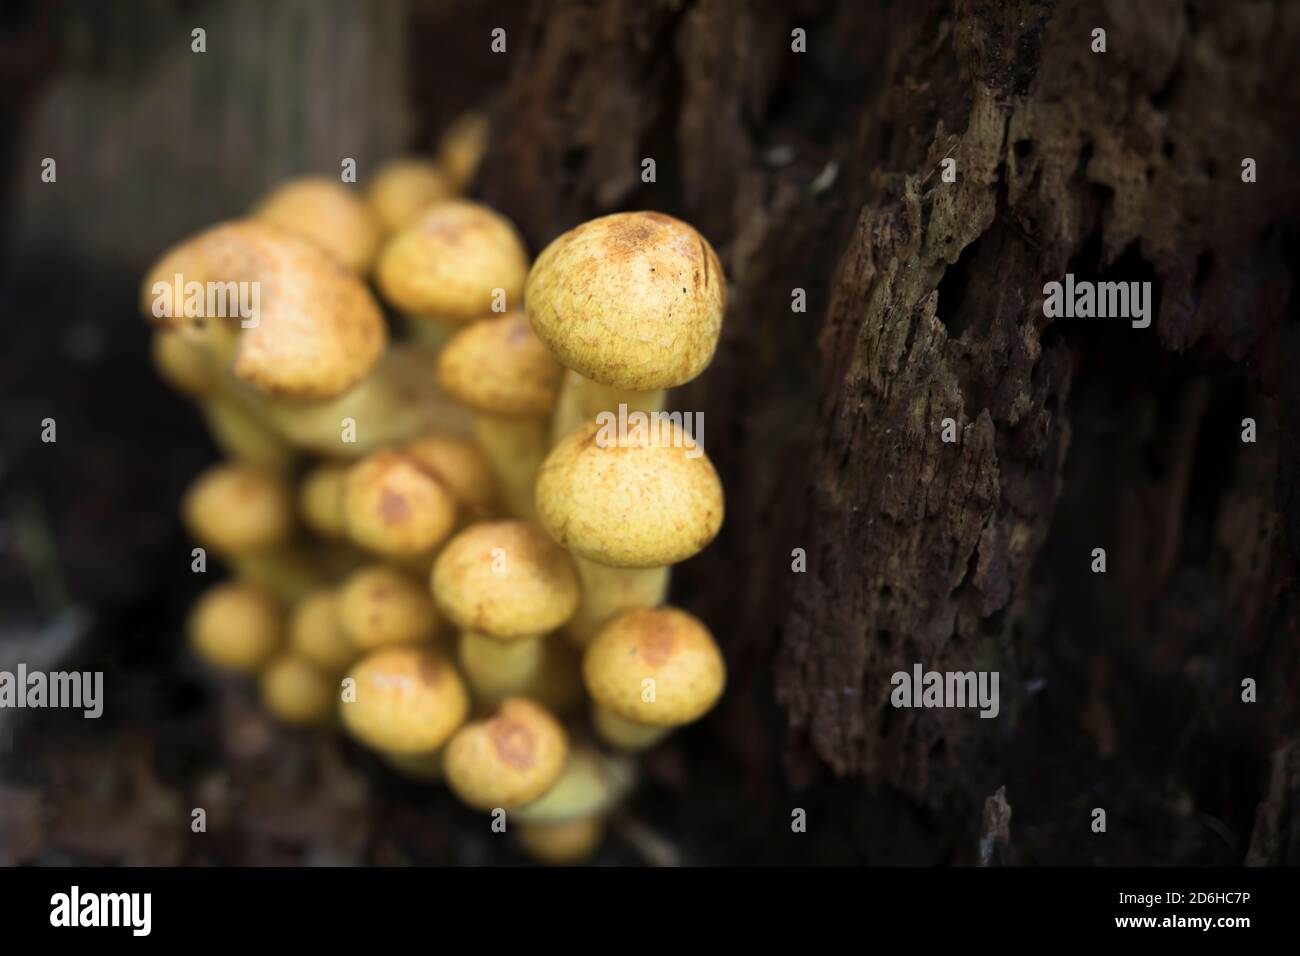 Mushrooms grwoing on a rotten beech tree stump in Europe Stock Photo